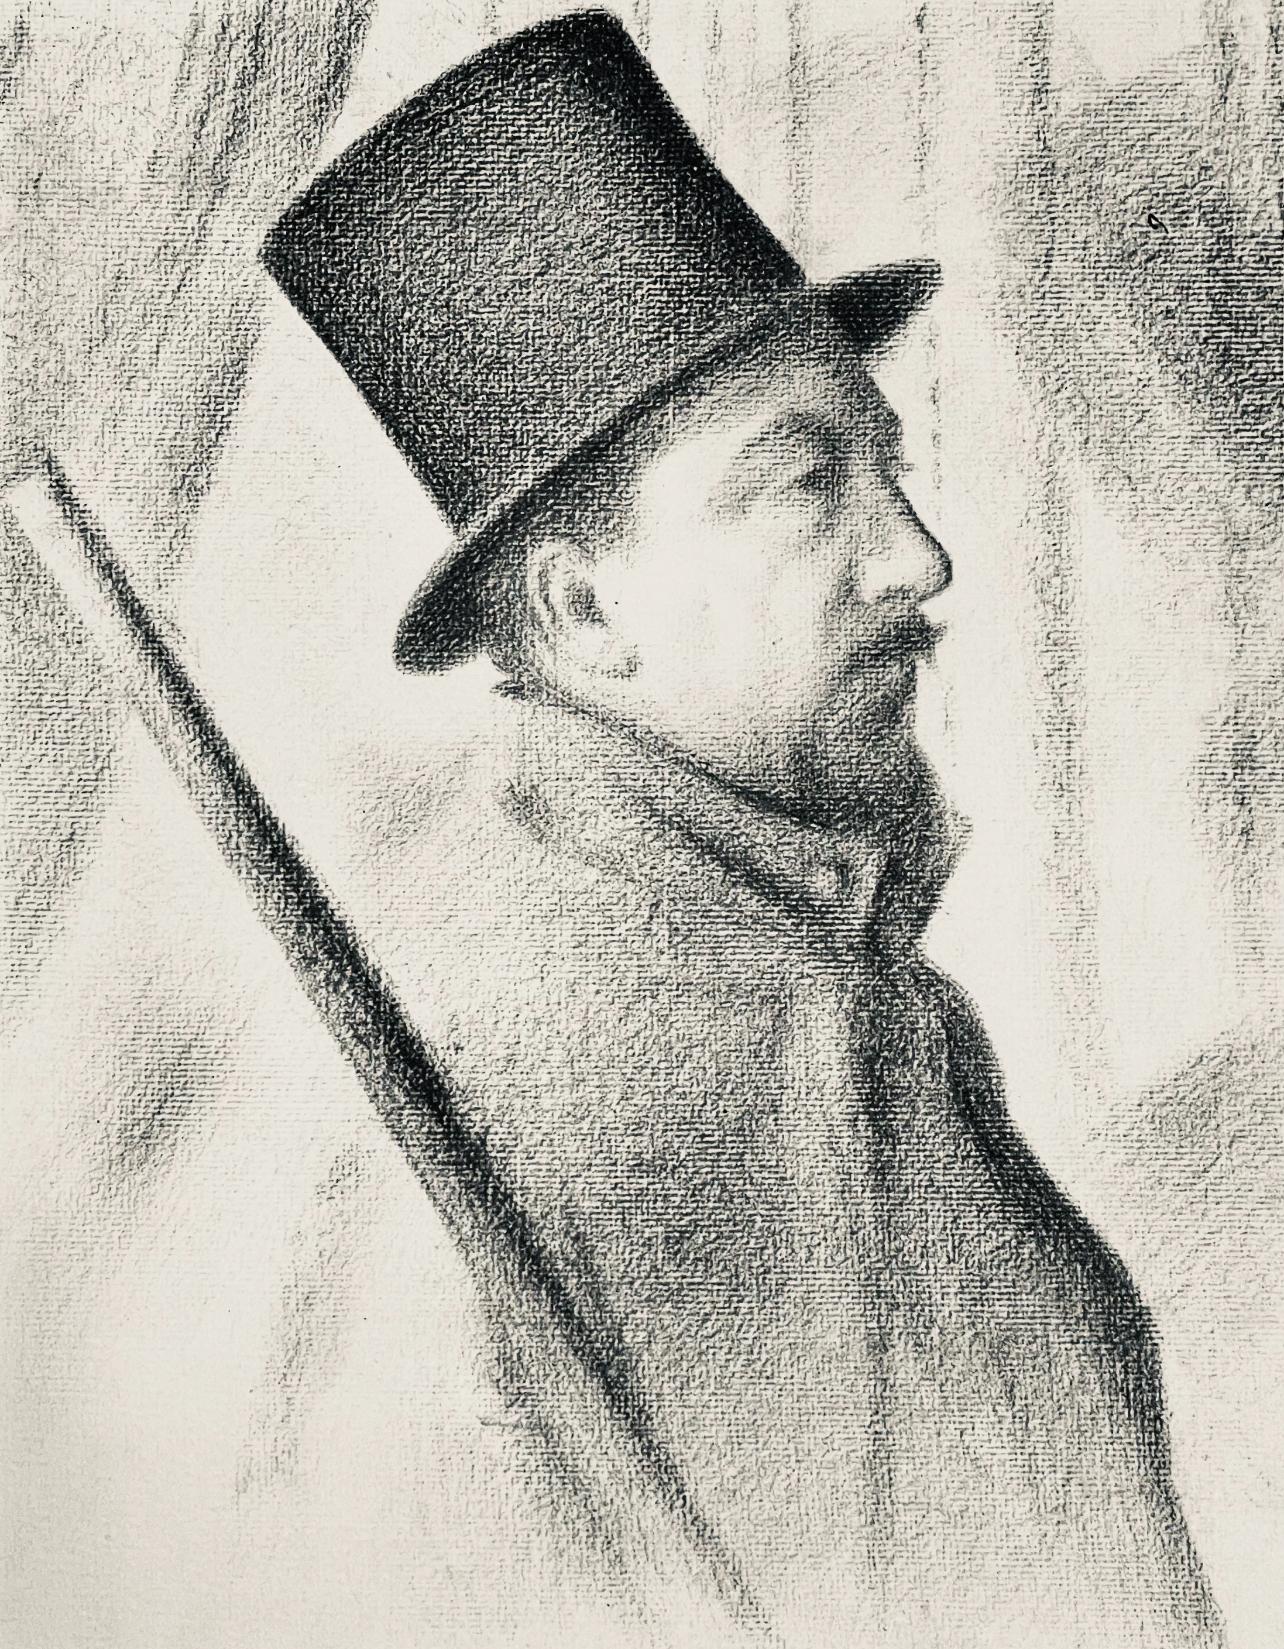 Seurat, Portrait de Paul Signac, Seurat (after)